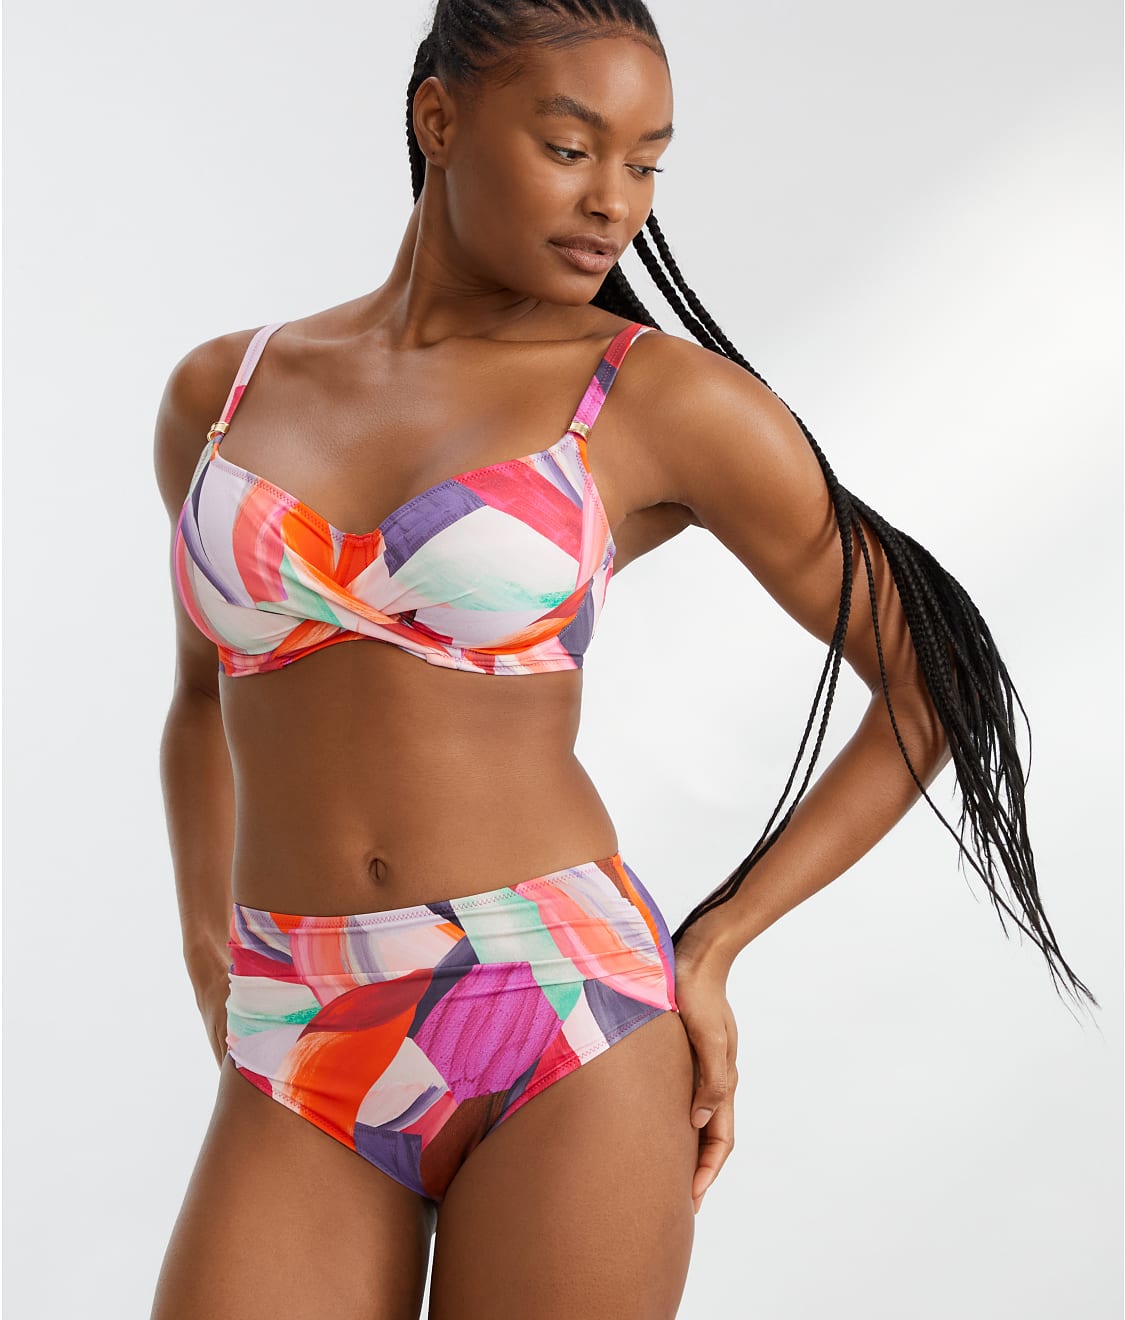 Fantasie: Aguada Beach Wrap Full Cup Bikini Top FS502905